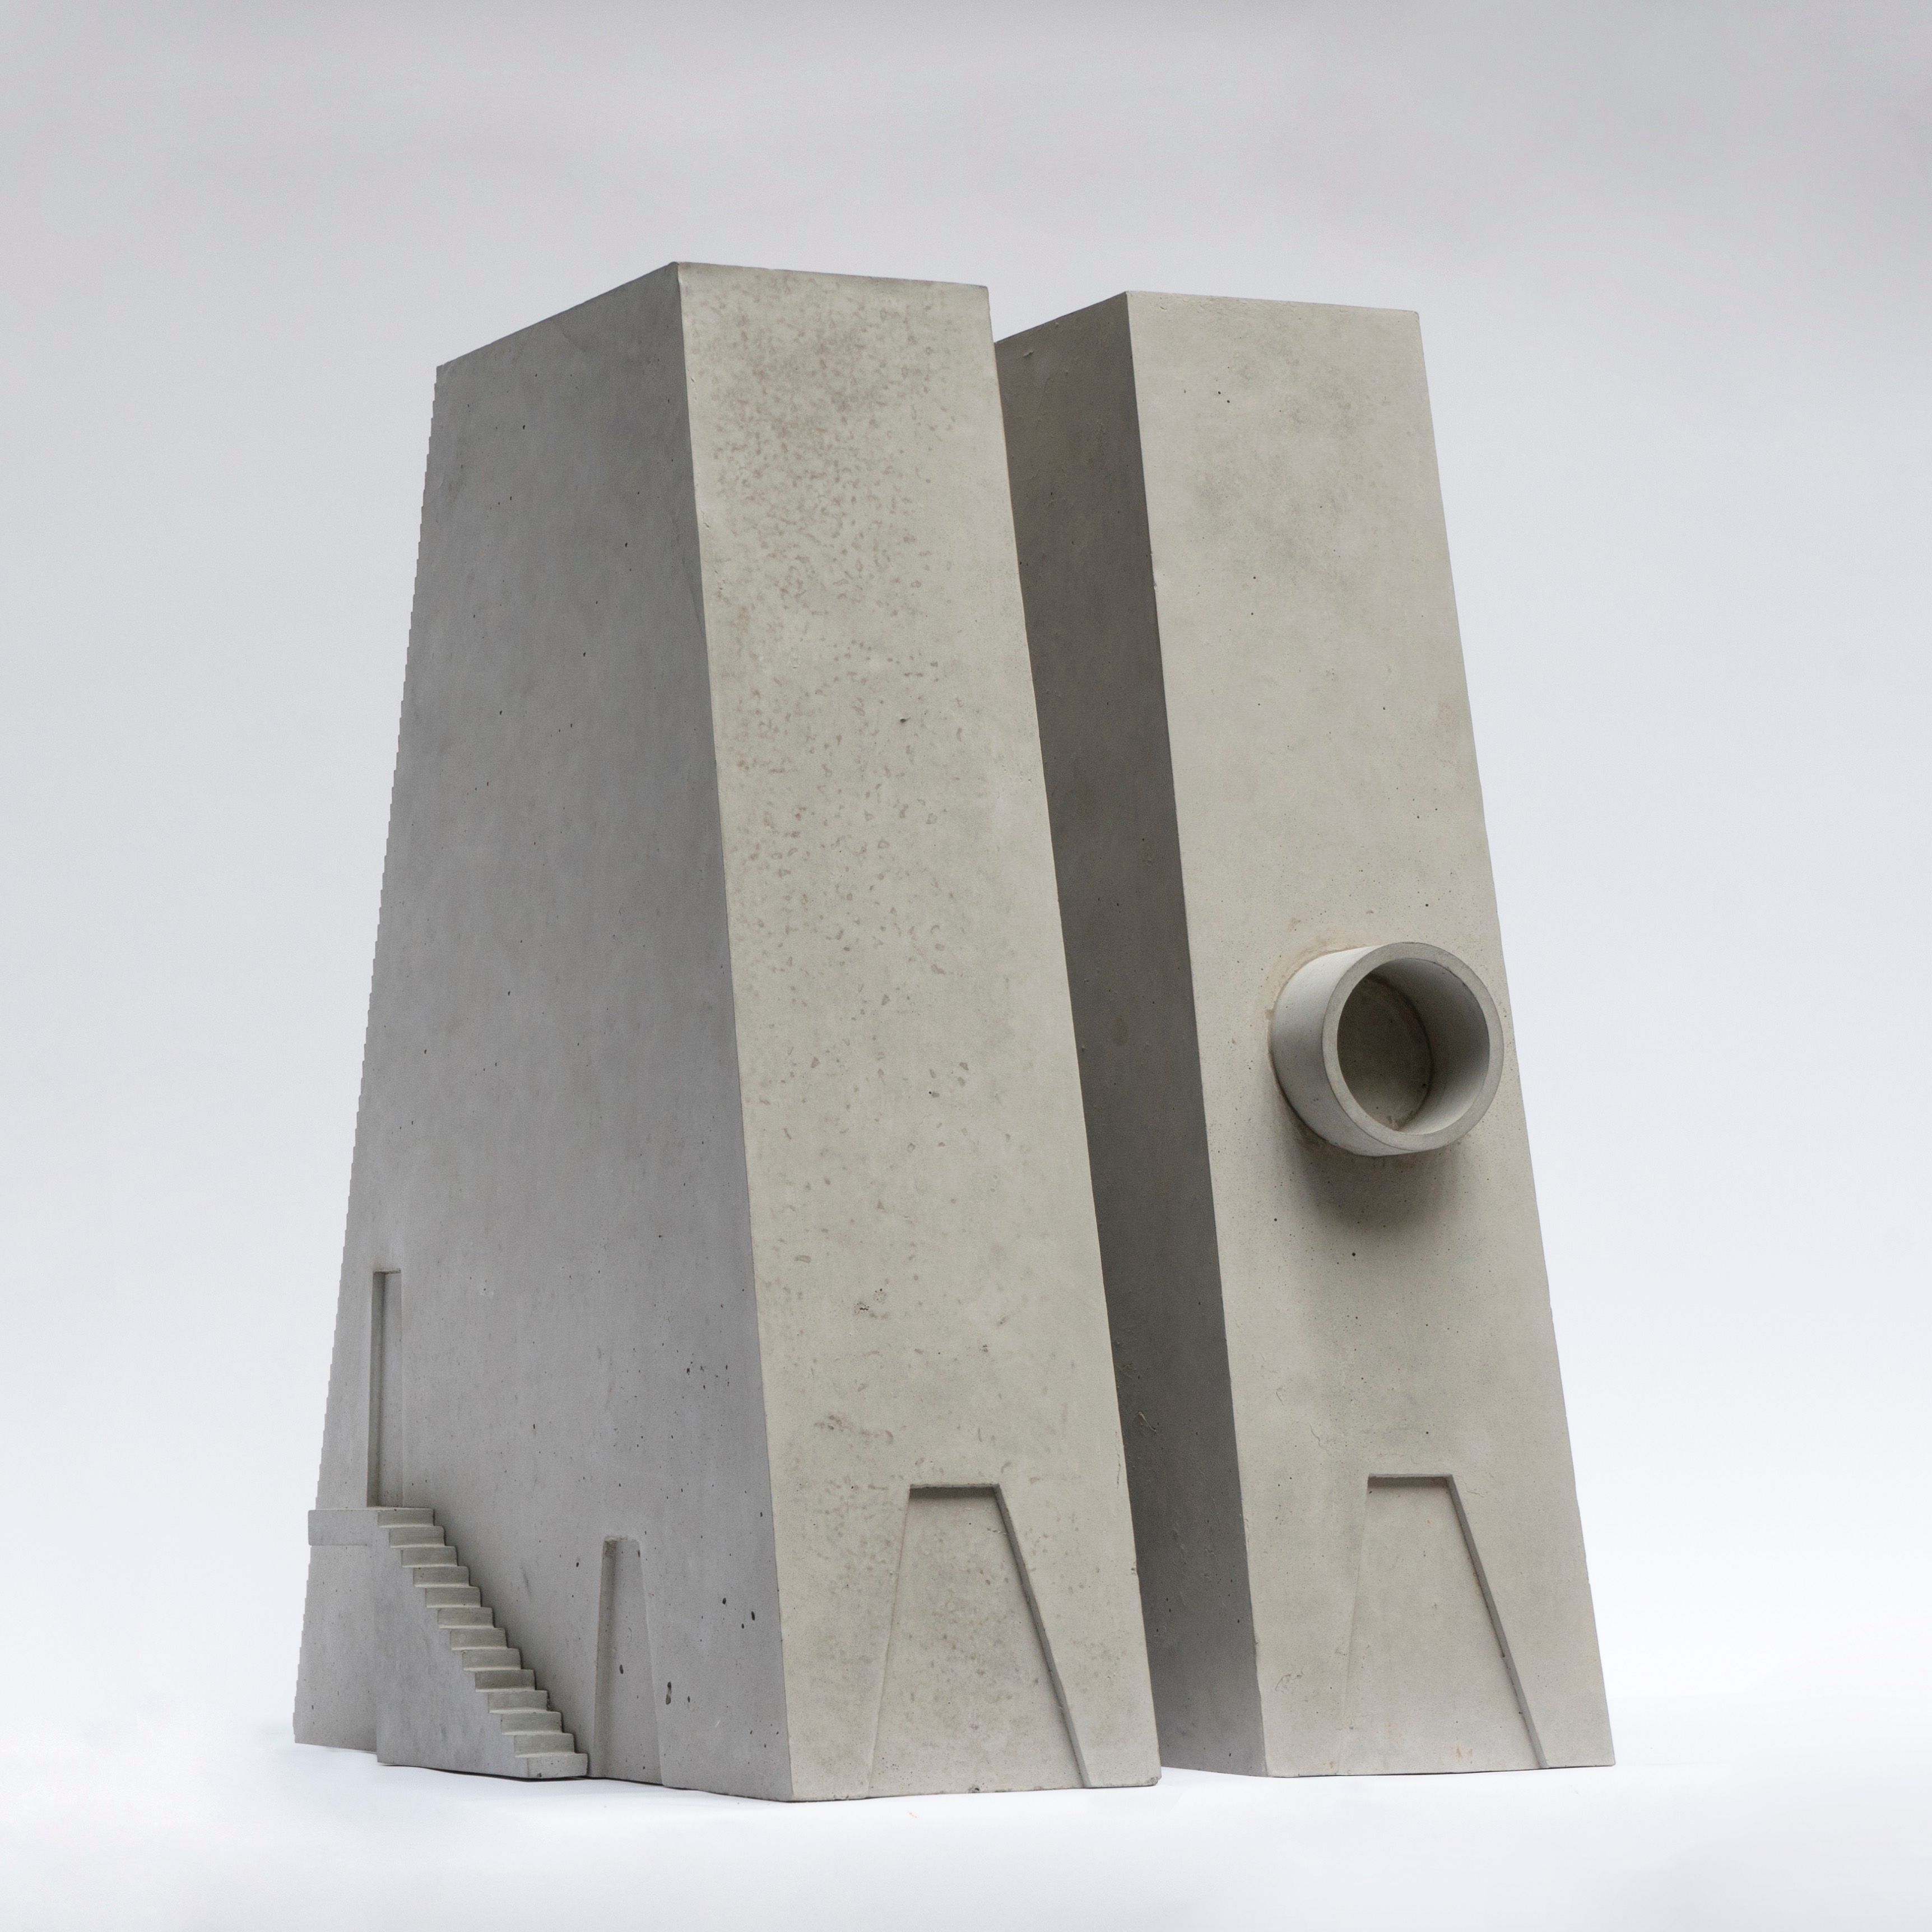 Pedro Reyes en “Brutalismo arquitectónico en México” en Museo de Arte Moderno